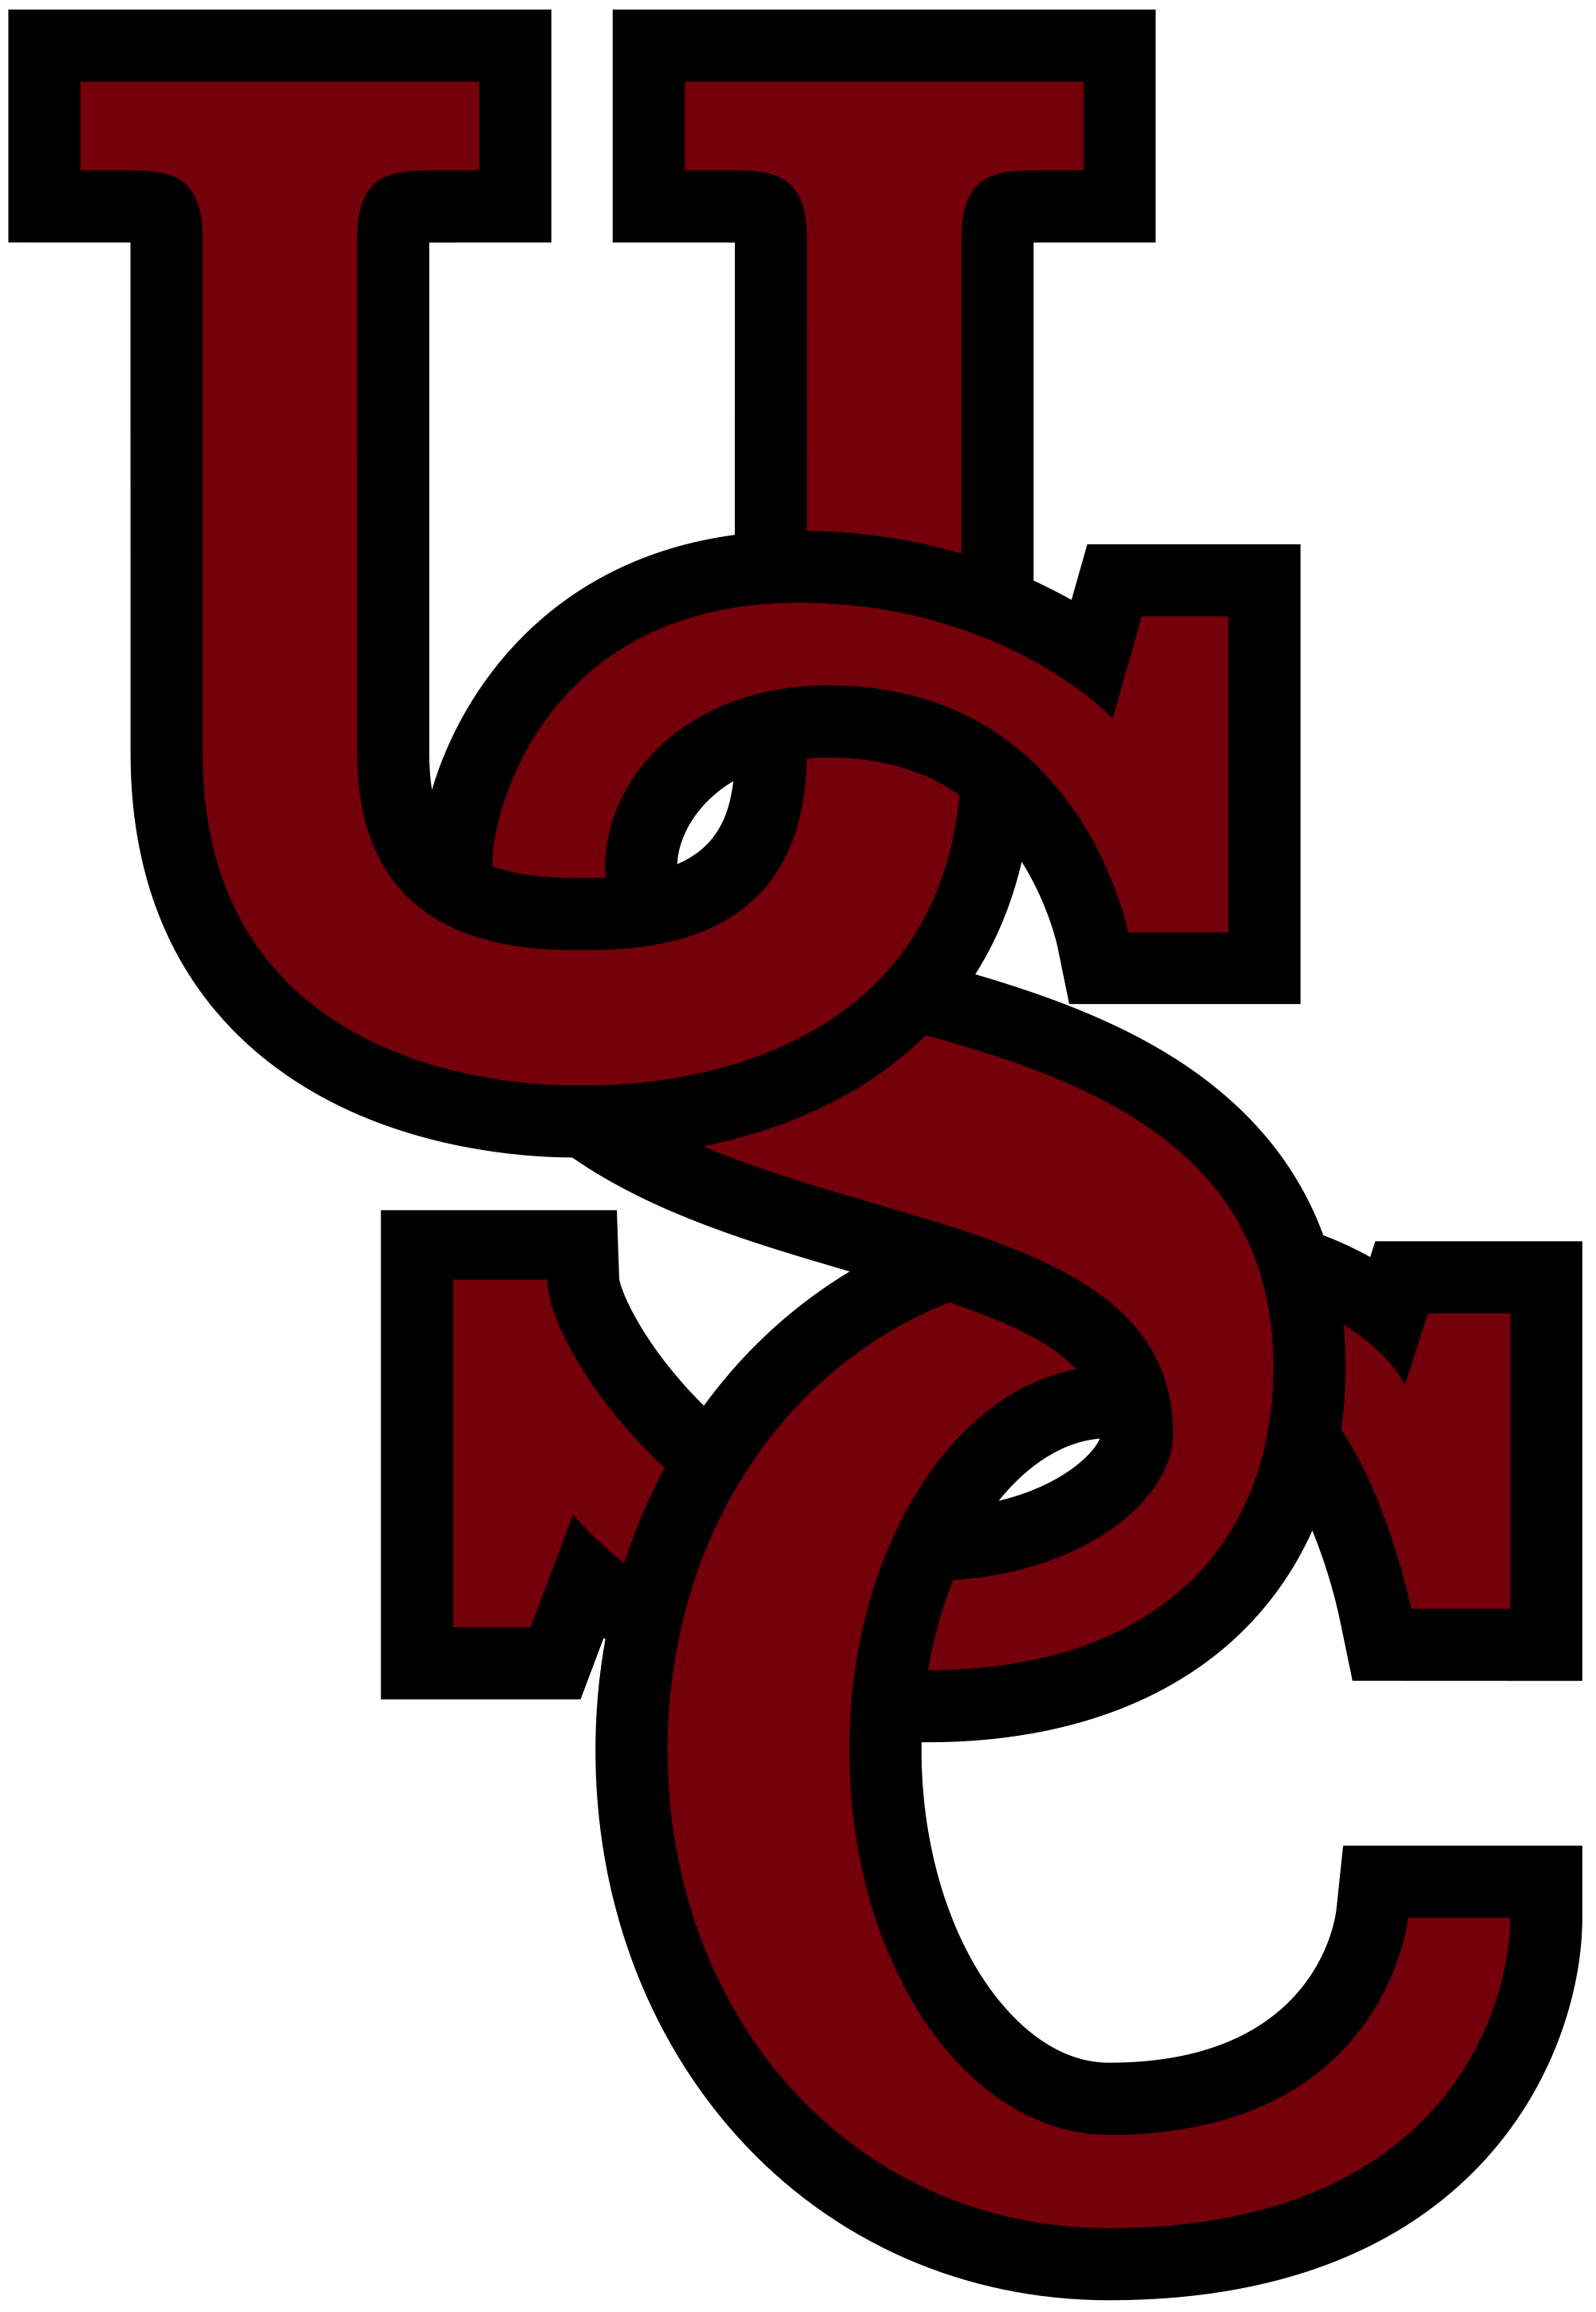 USC Logo - File:USC text logo.svg - Wikimedia Commons